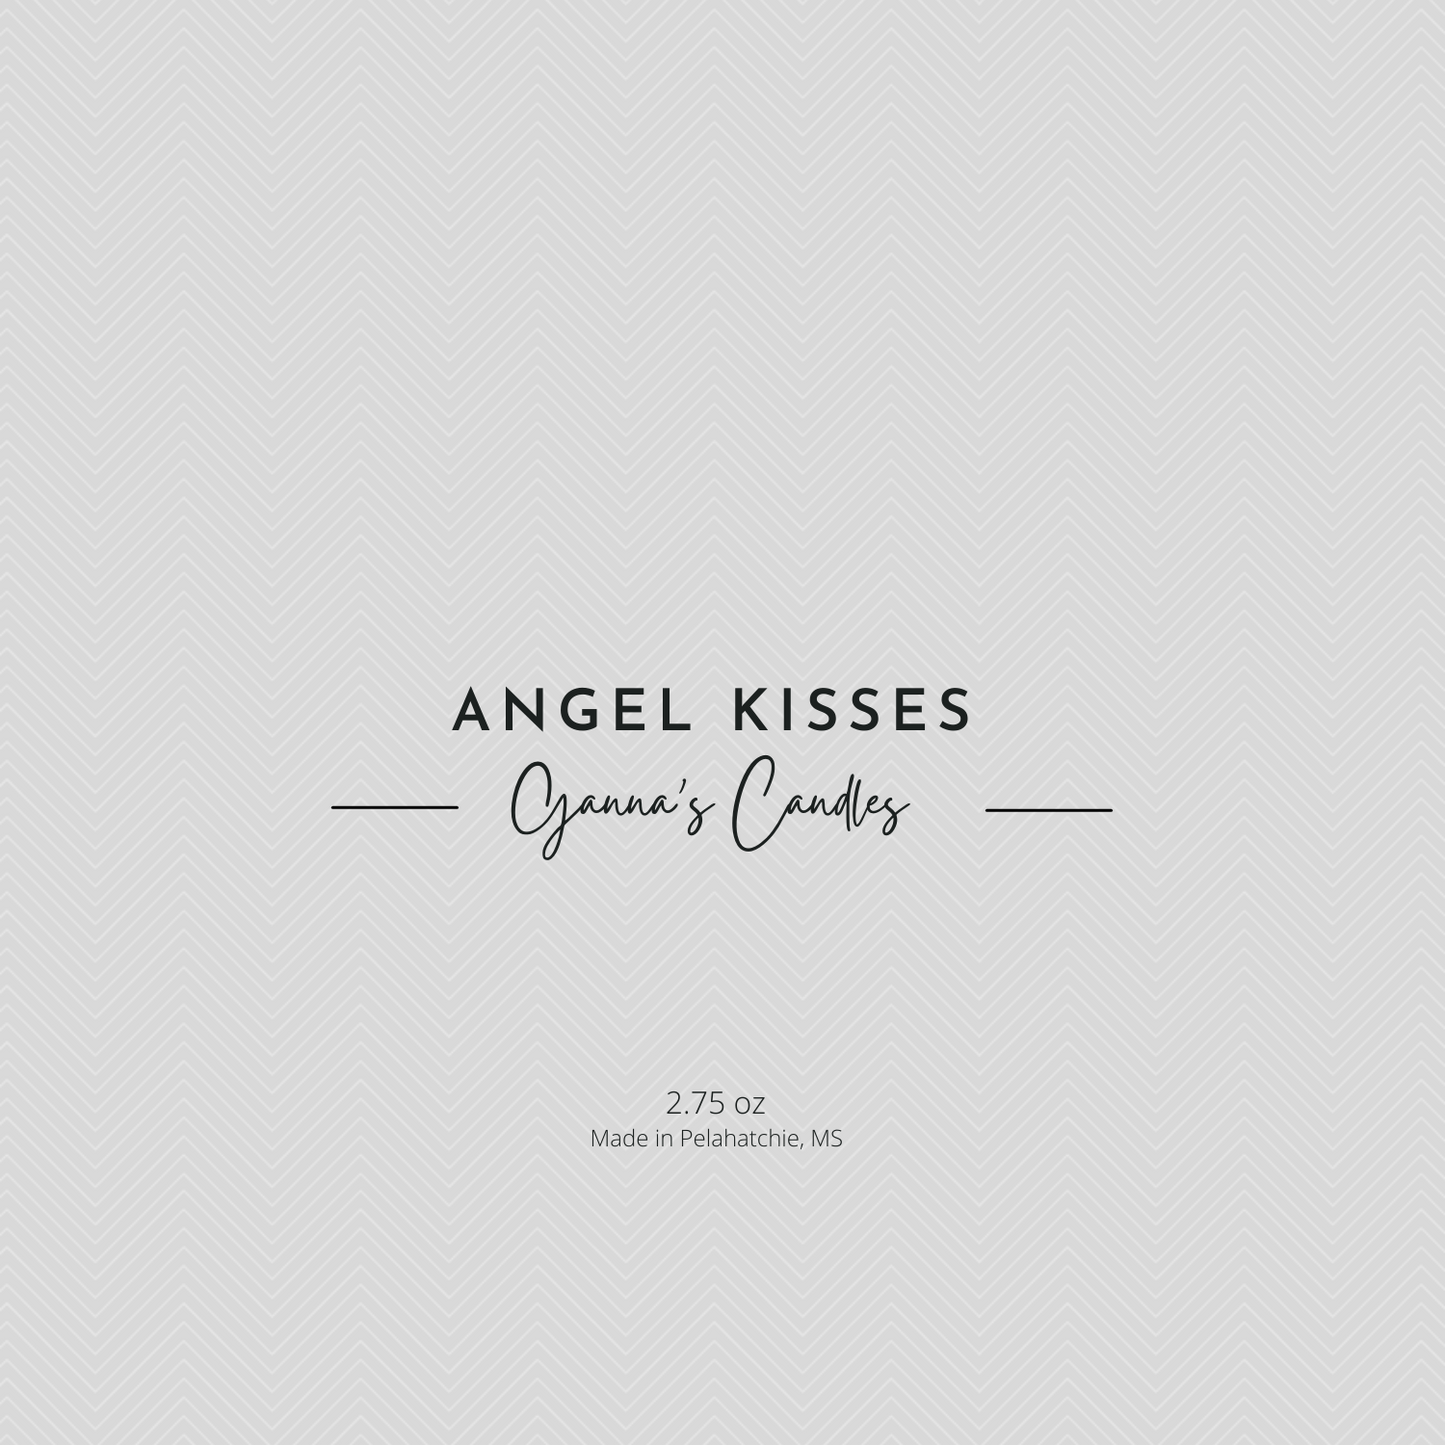 Angel Kisses Melts